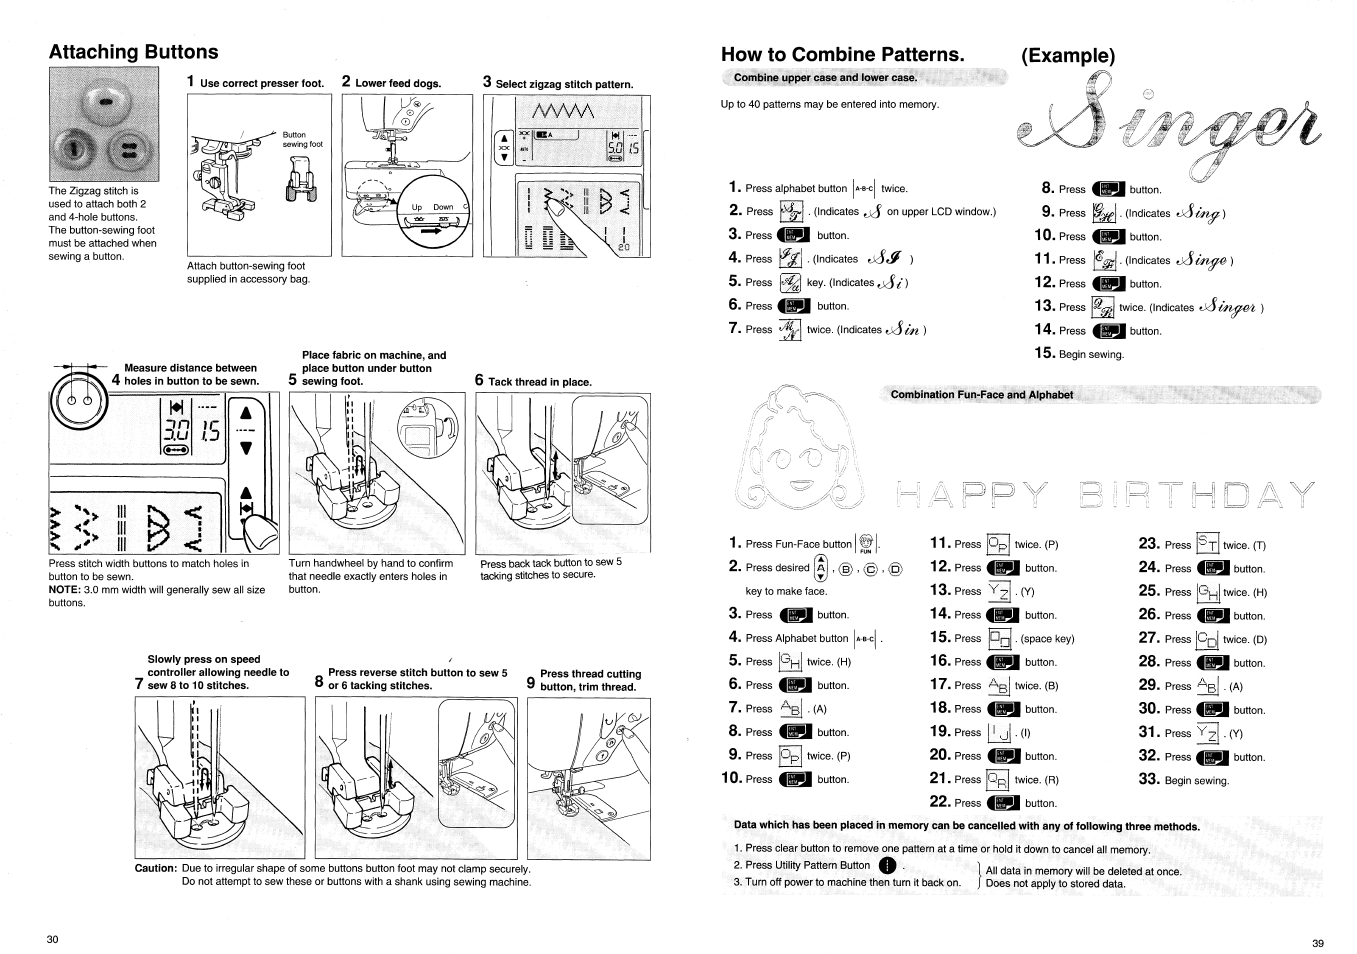 Attaching buttons, Press thread cutting 3 button, trim thread, Лллал | Шш d.uis | SINGER XL100 Quantum User Manual | Page 32 / 72